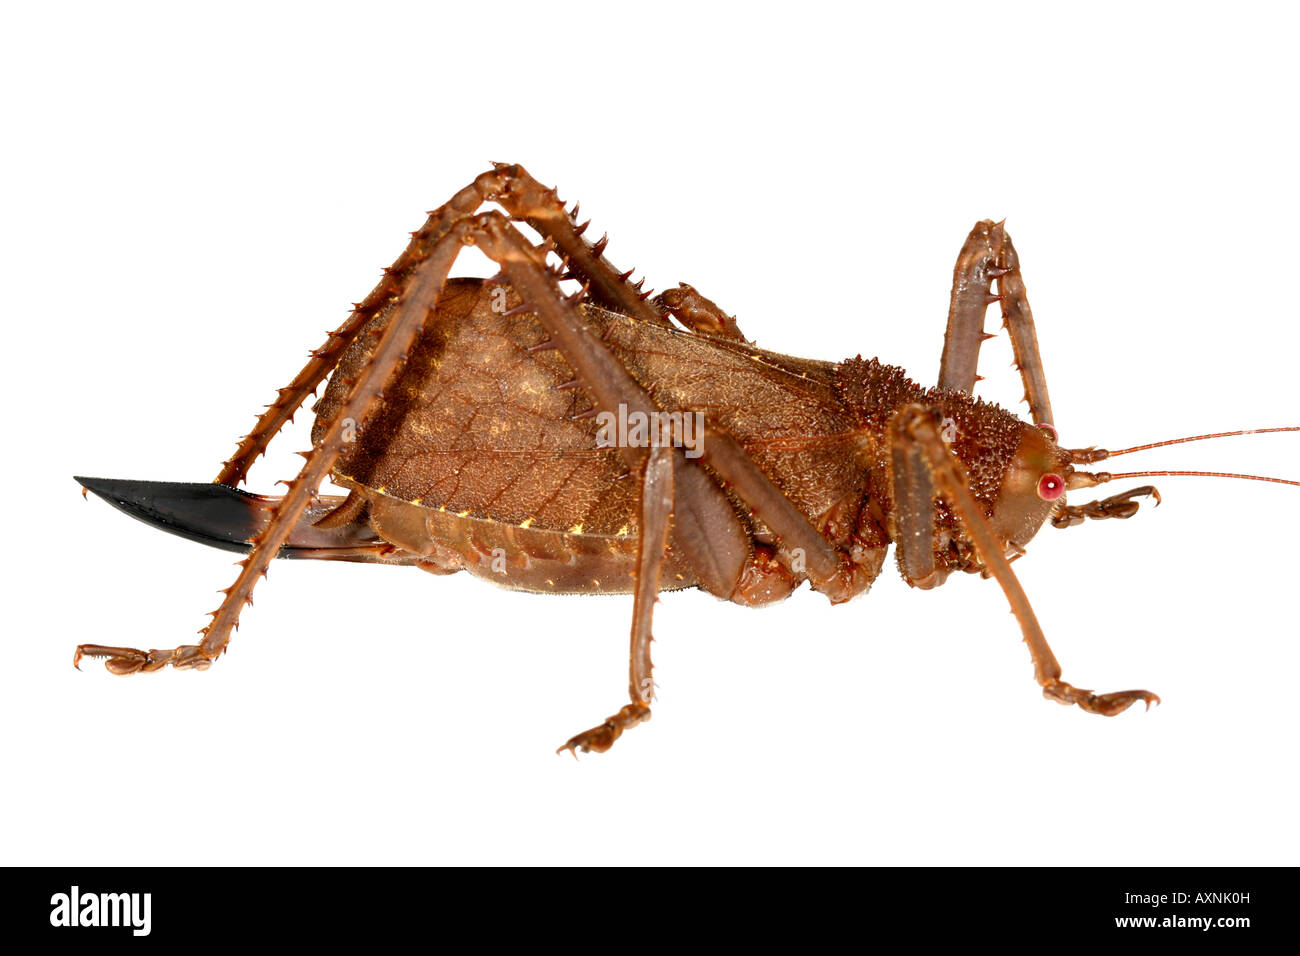 Large bush cricket from the Ecuadorian Amazon Stock Photo